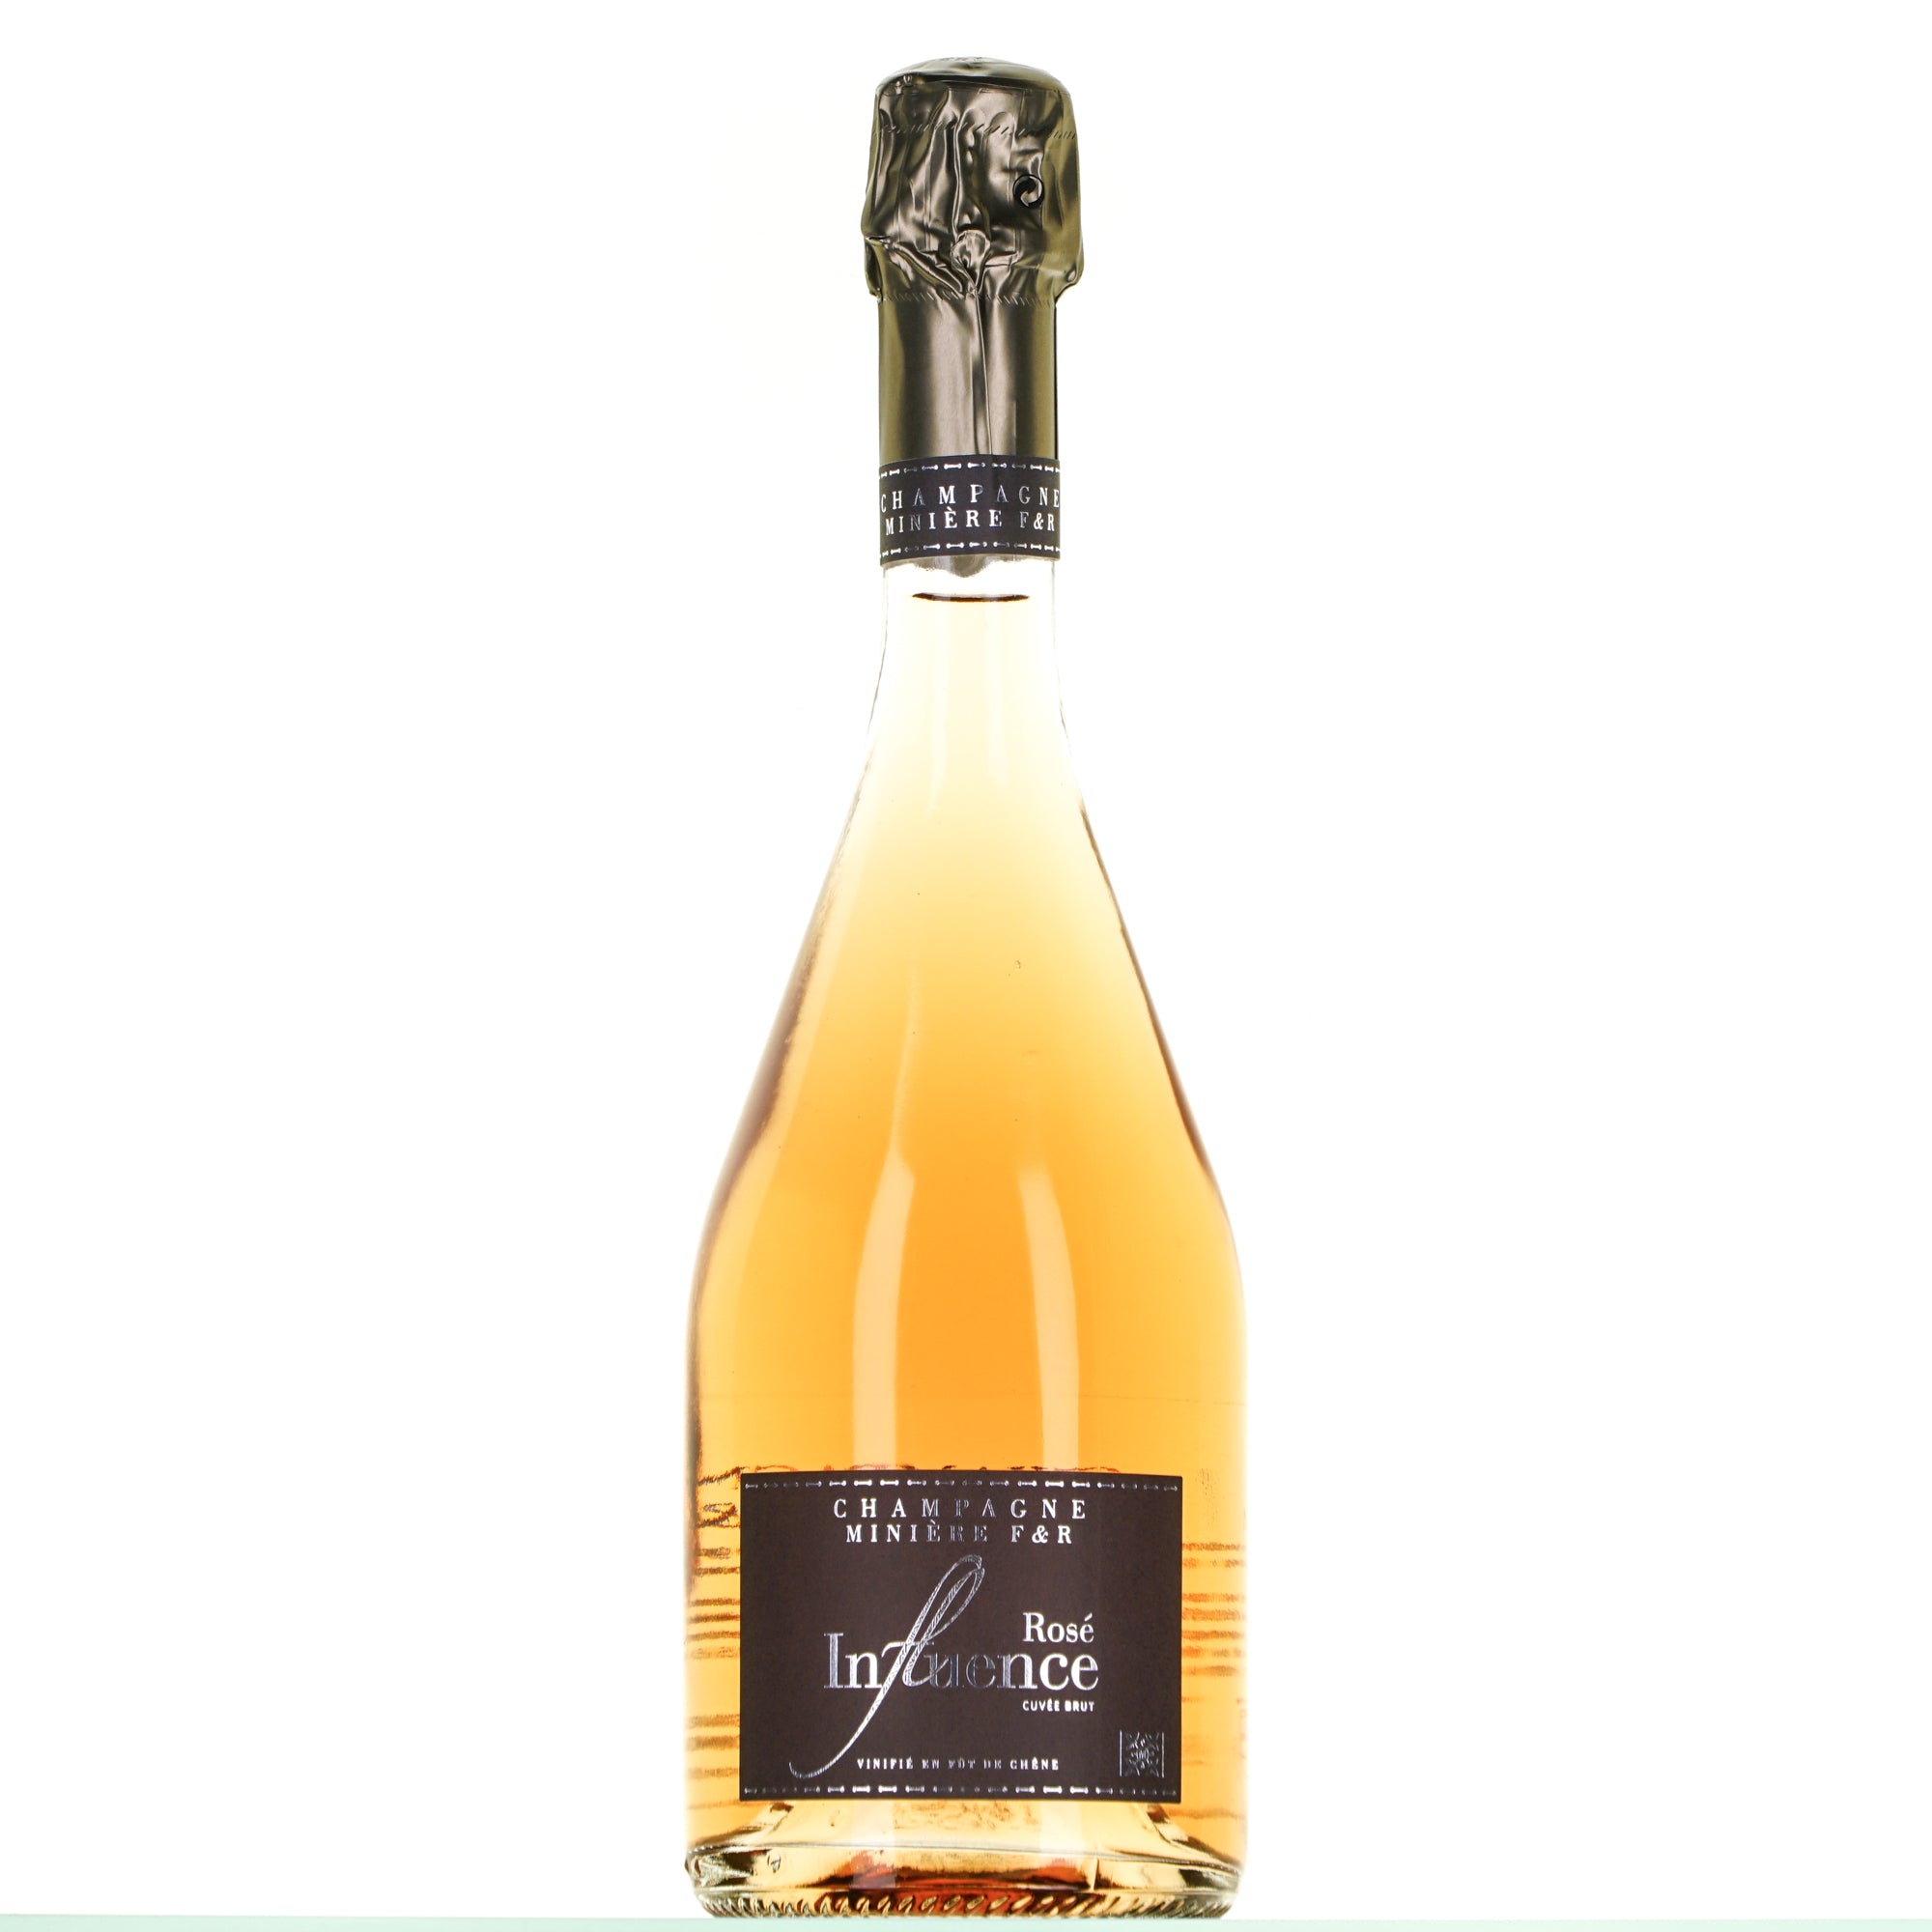 Champagne Influence Brut Rose Miniere F&R lt 0,750